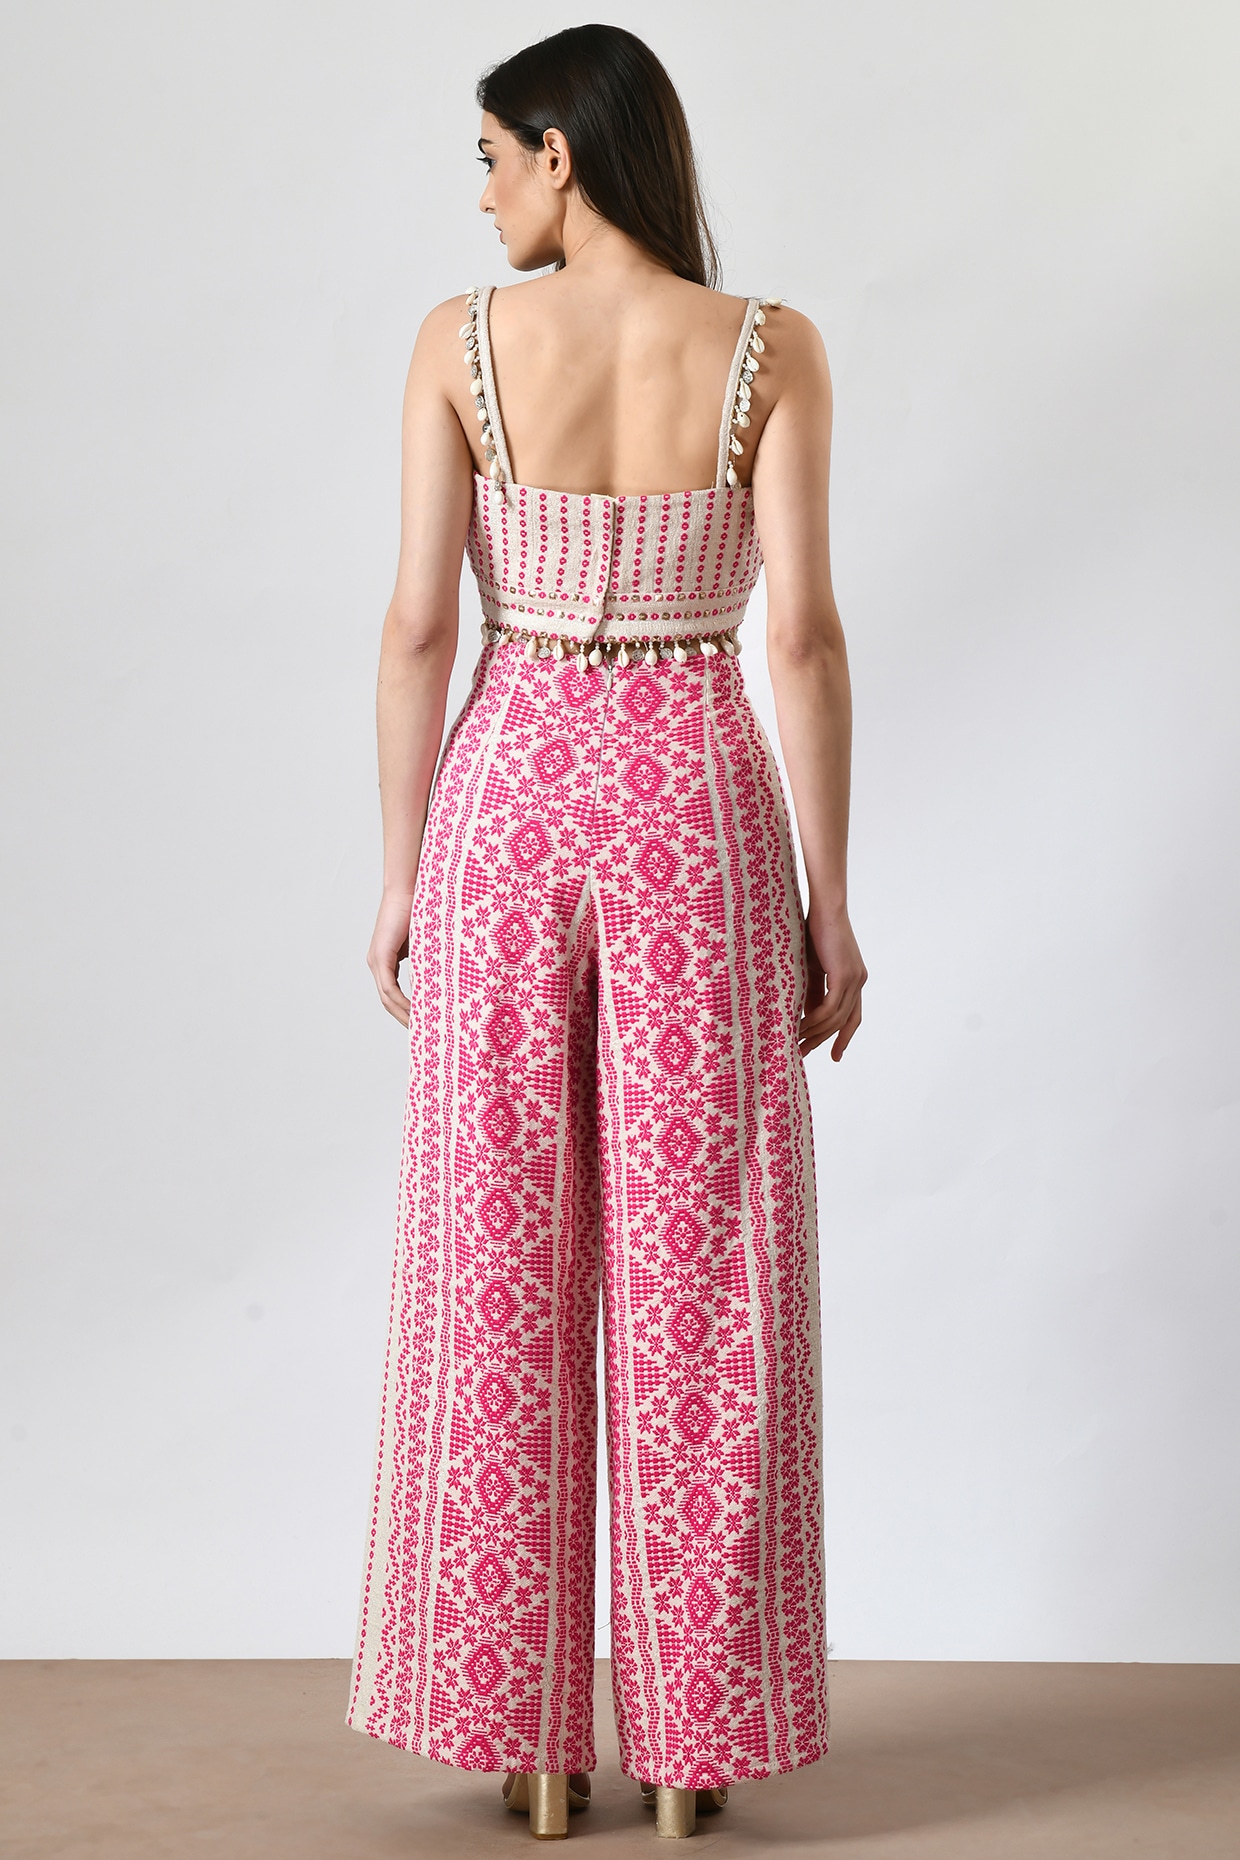 Pink Jacquard Pant Set Design by Salt and Spring at Pernia's Pop